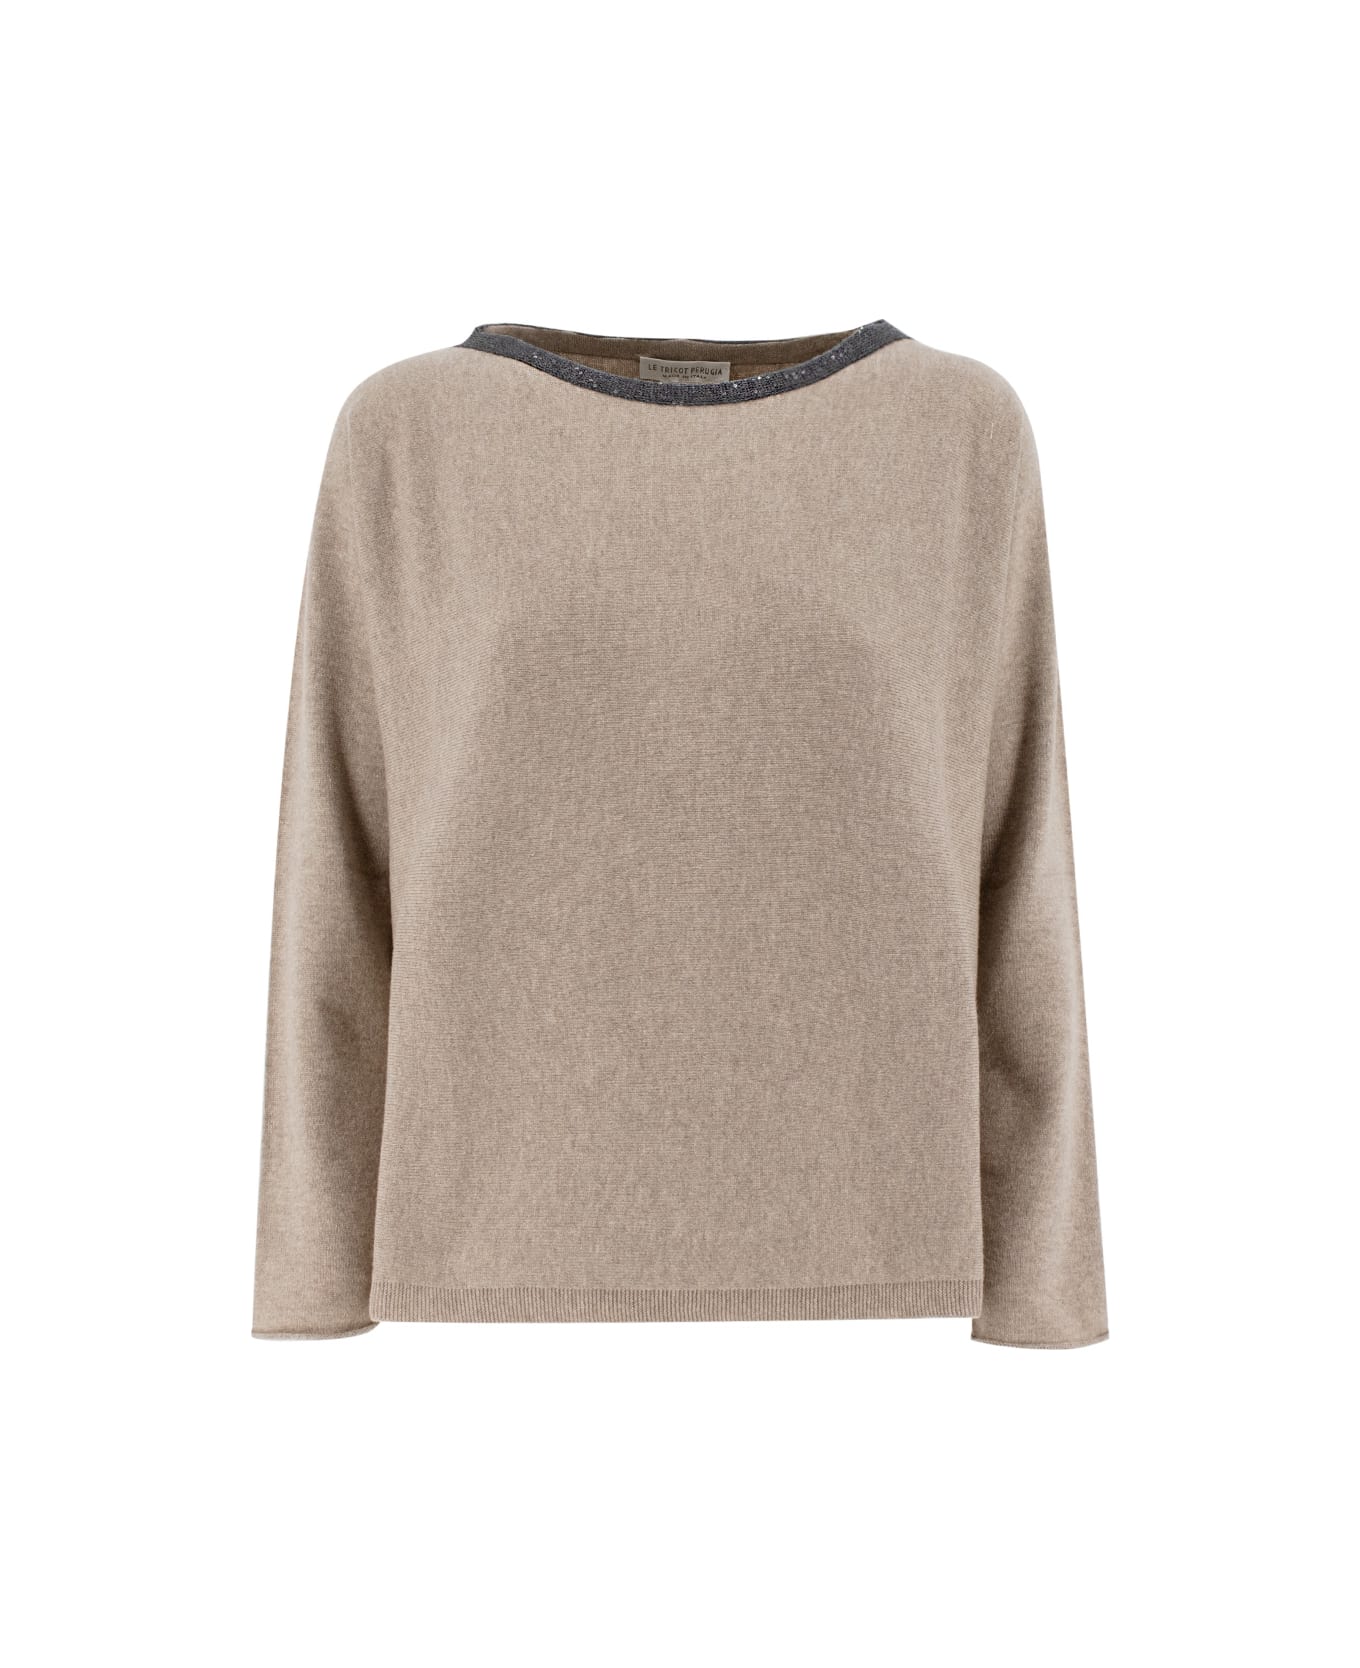 Le Tricot Perugia Sweater - D.BEIGE/D.GREY ニットウェア